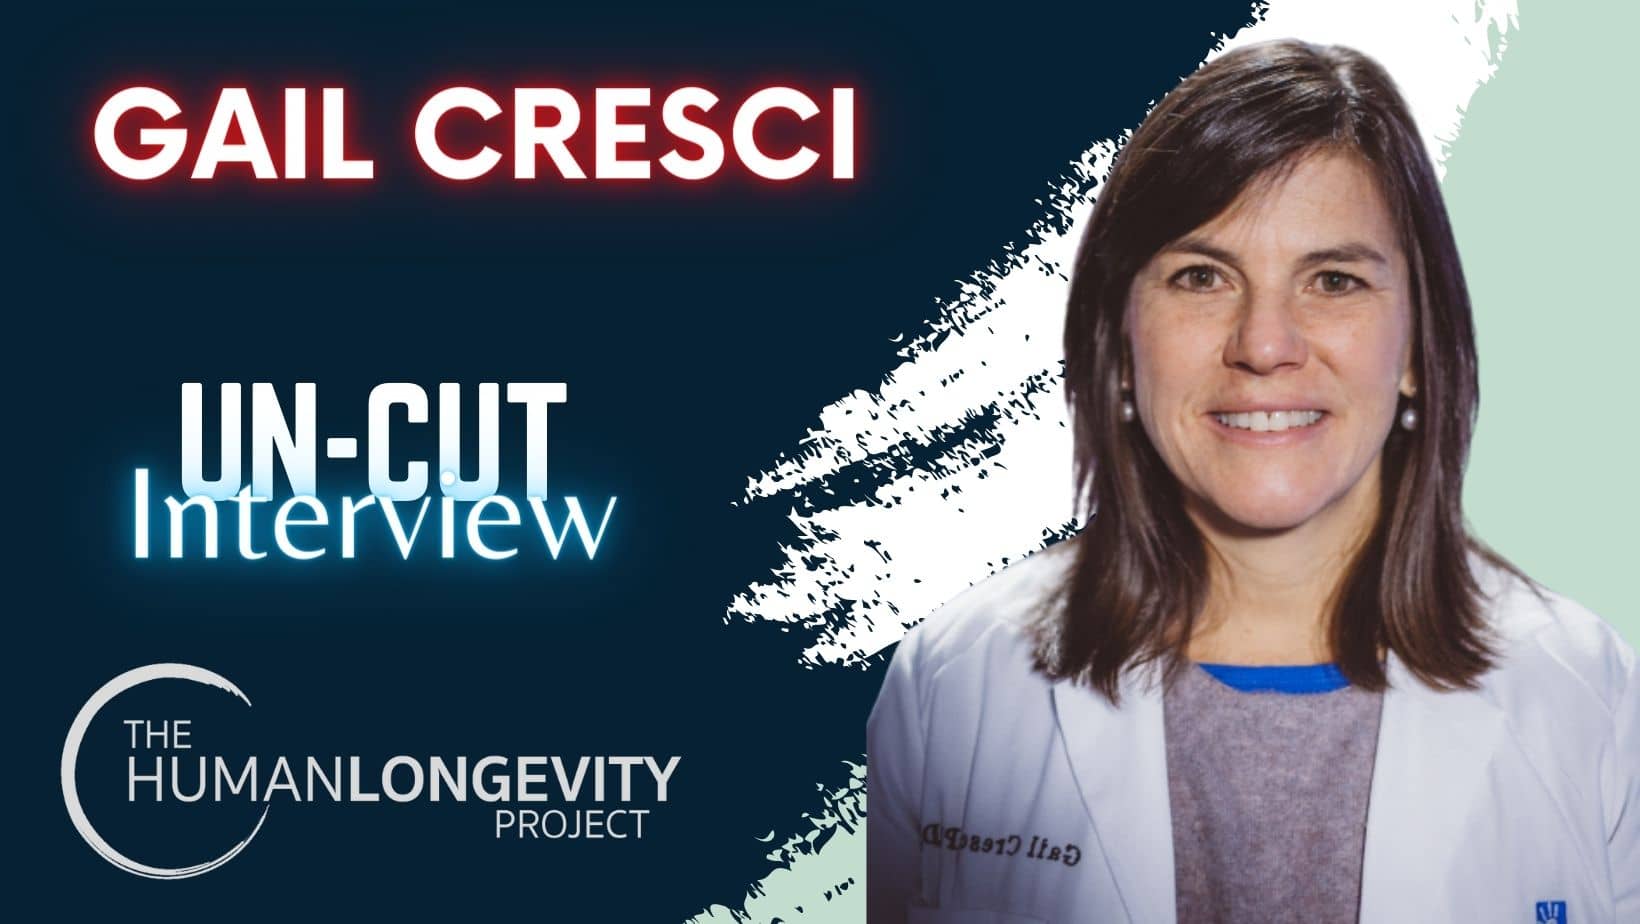 Human Longevity Project Uncut Interview With Dr. Gail Cresci